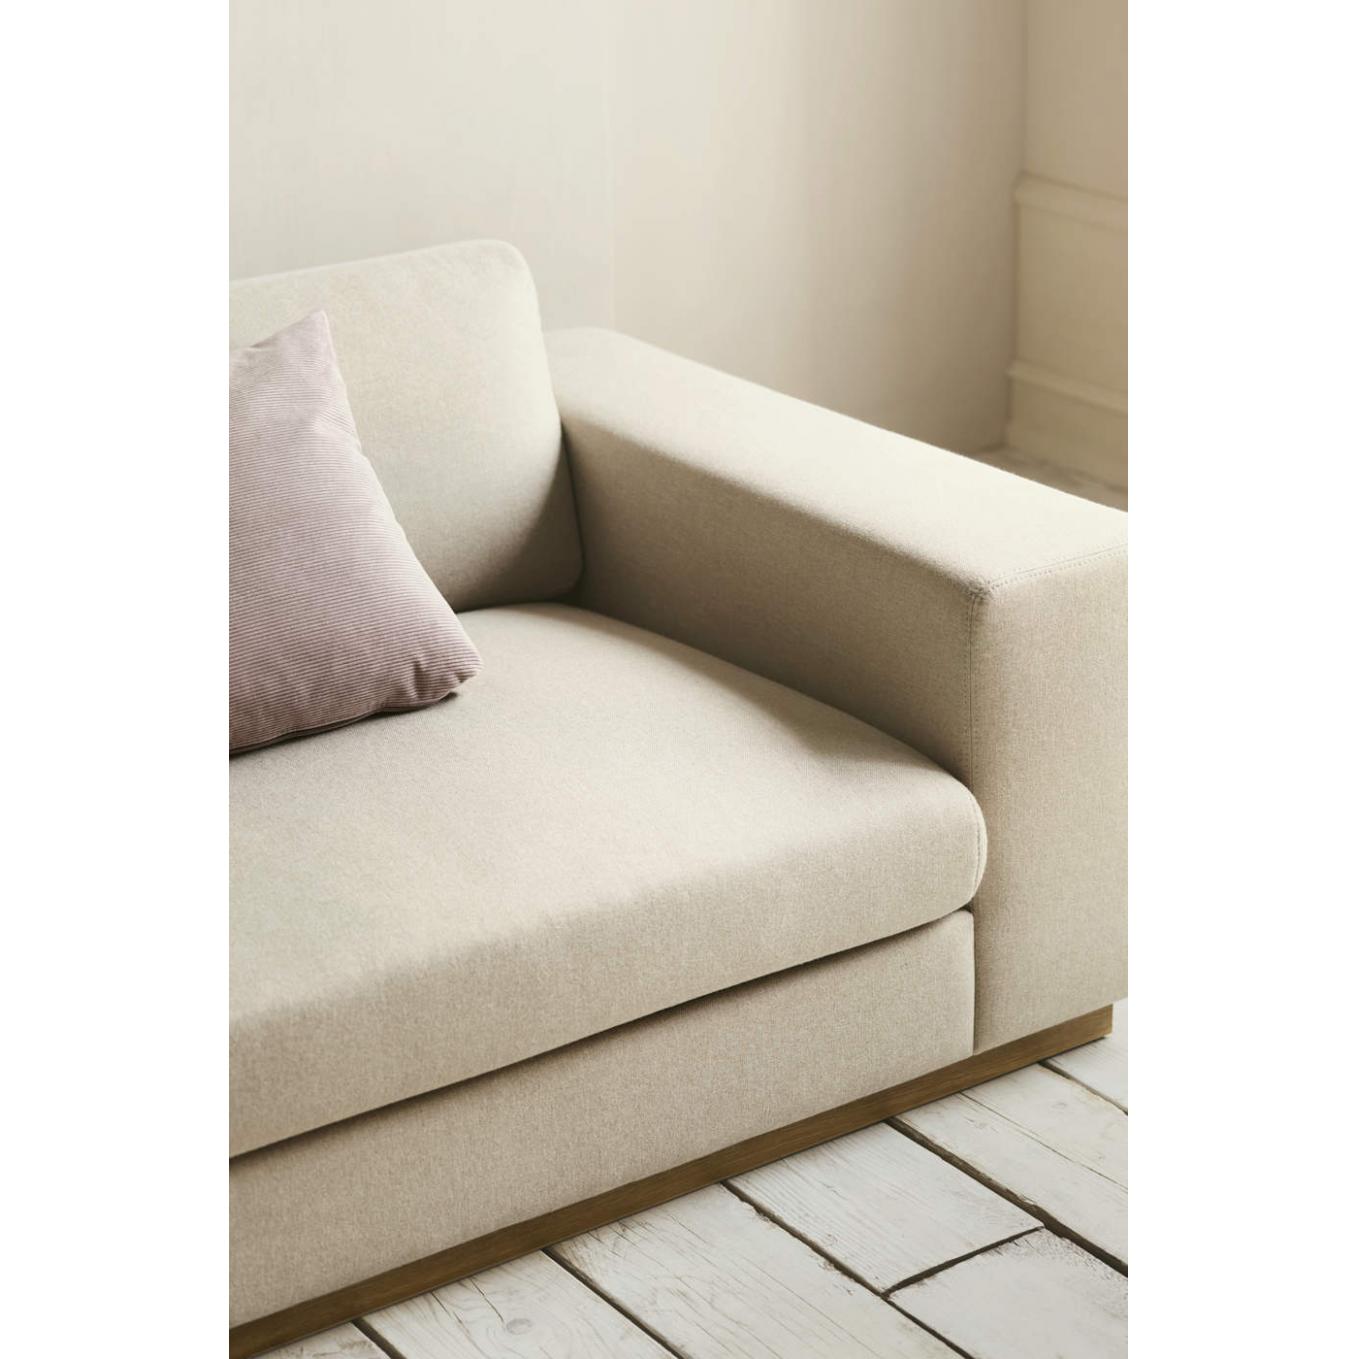 Bolia-Sepia-sofa-details-kanape-reszletek